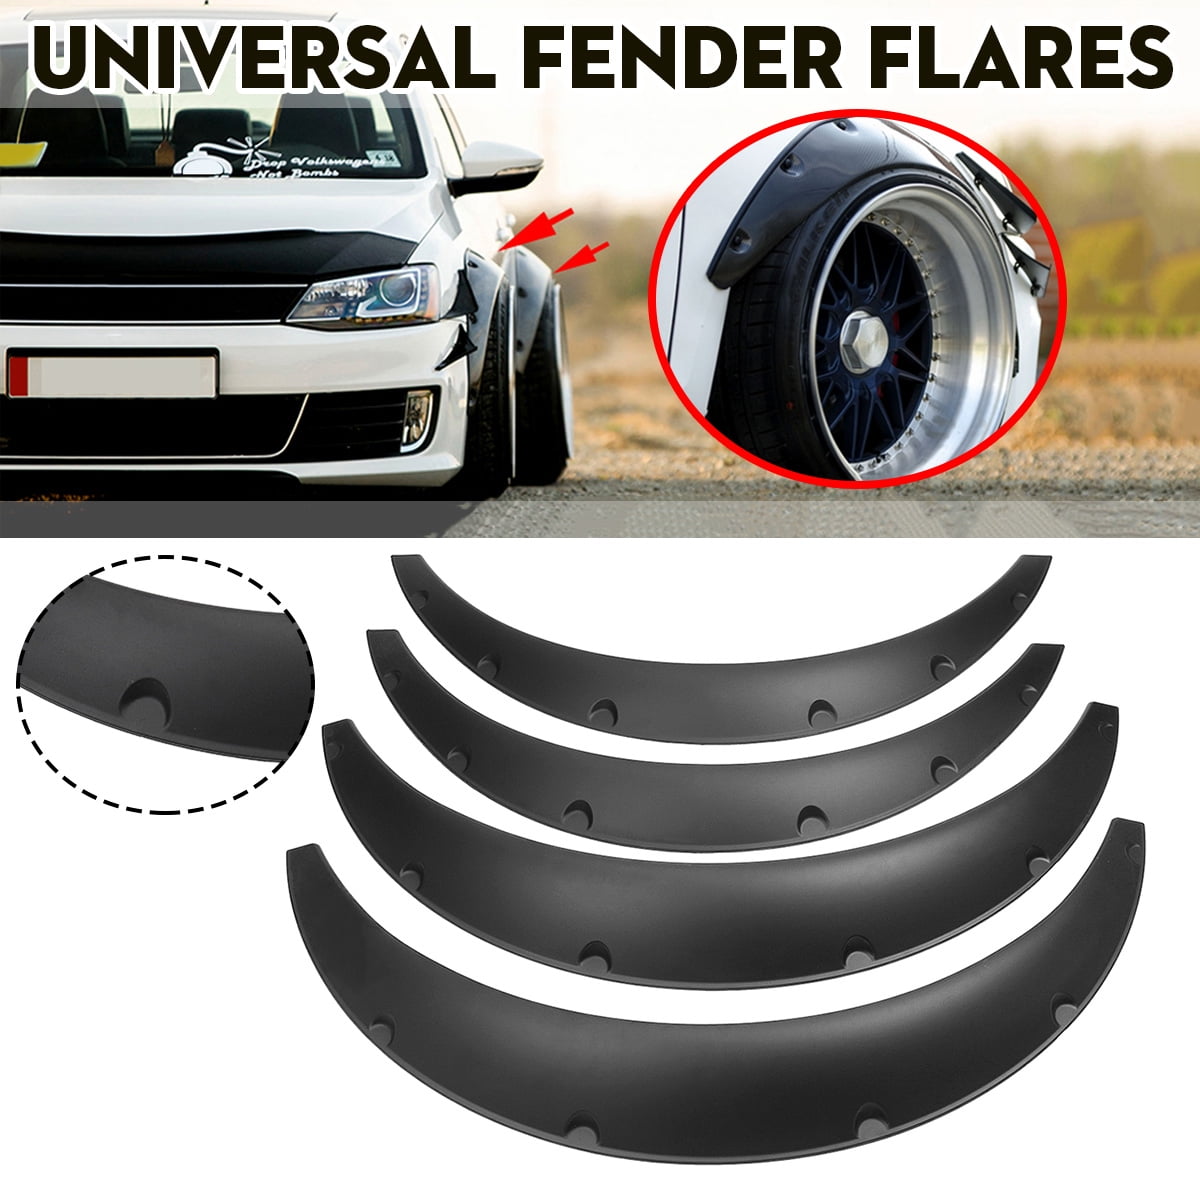 Universal Fender Flares Flexible Carbon Fiber Style Fenders Polyurethane For Car